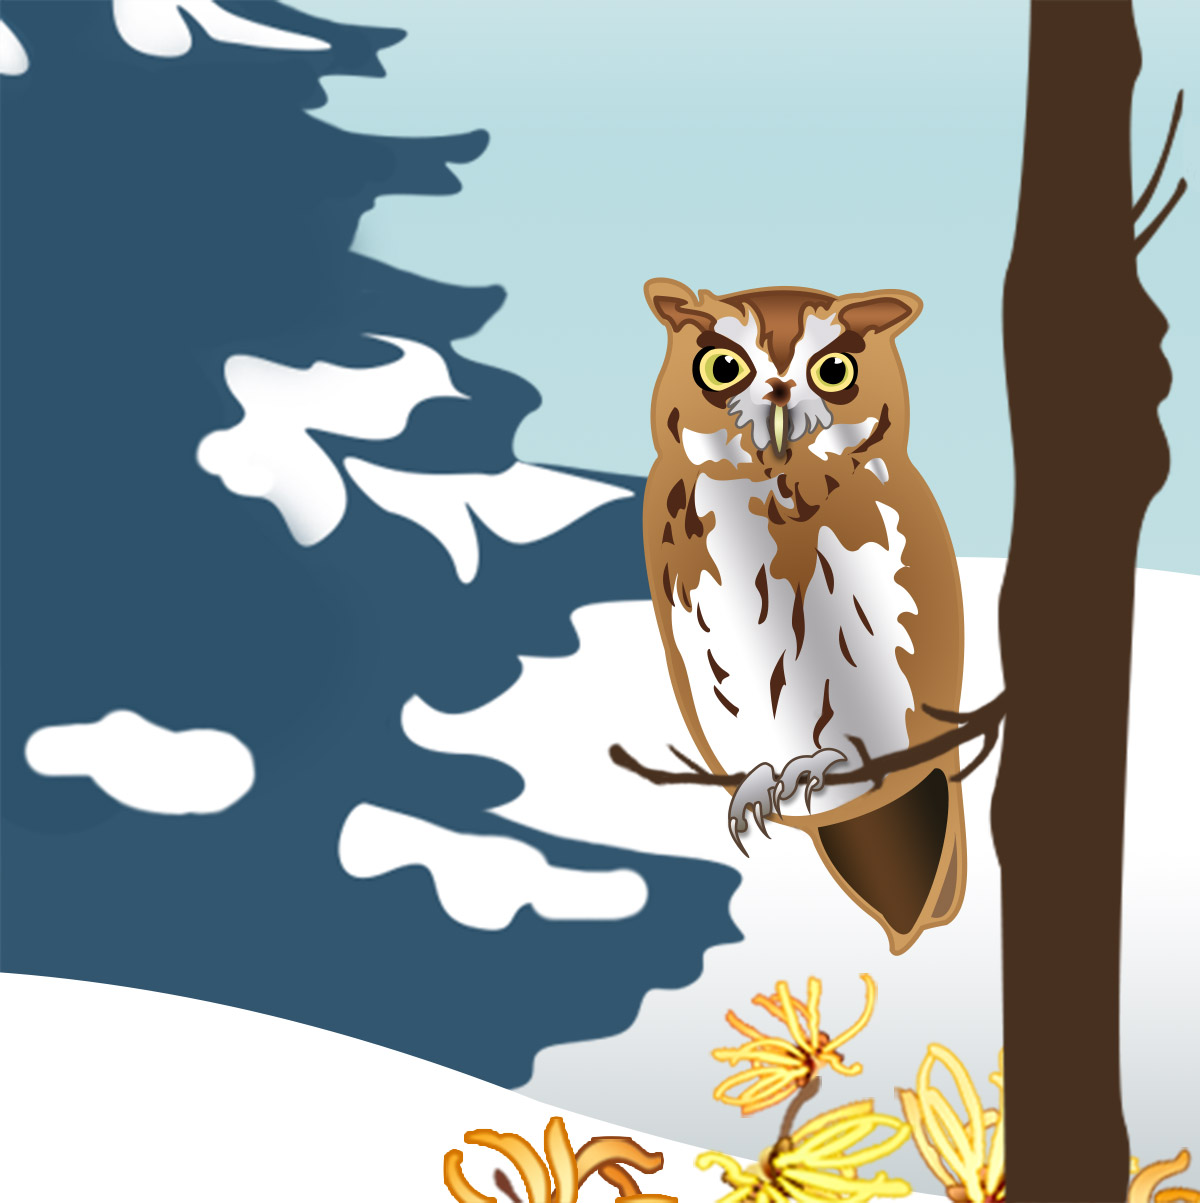 ILLUSTRATION: Owl in winter.